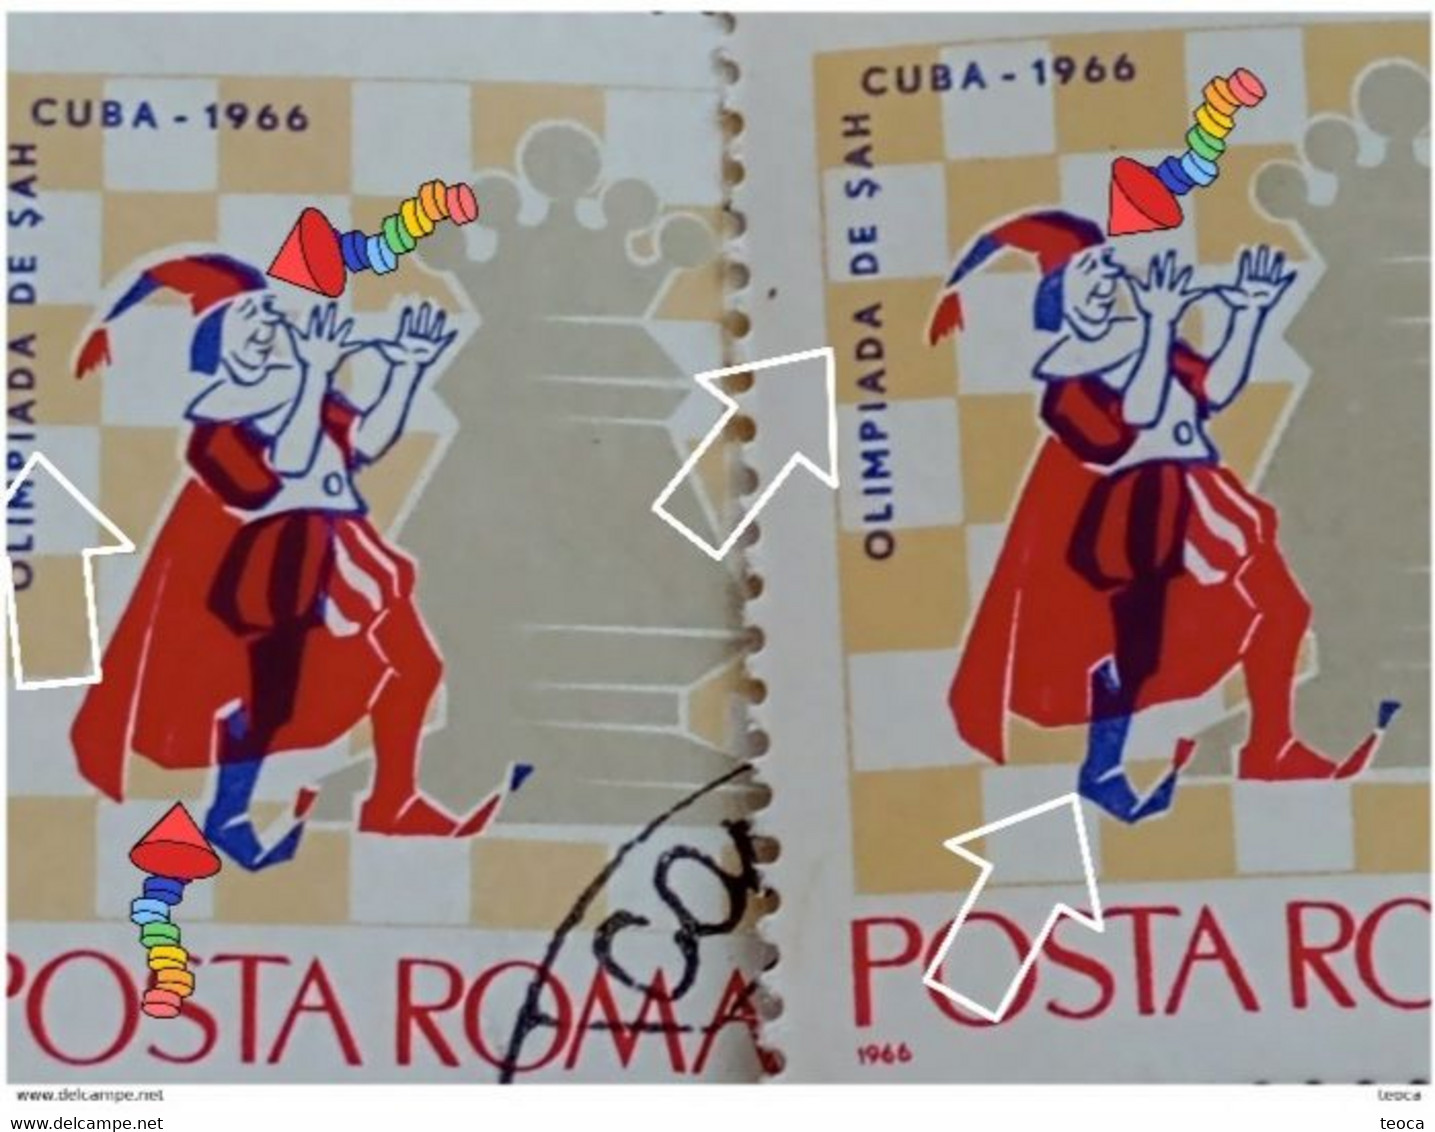 Stamps Errors Chess Romania 1966 MI 2479 Printed With Misplaced Chess Piece Used - Abarten Und Kuriositäten